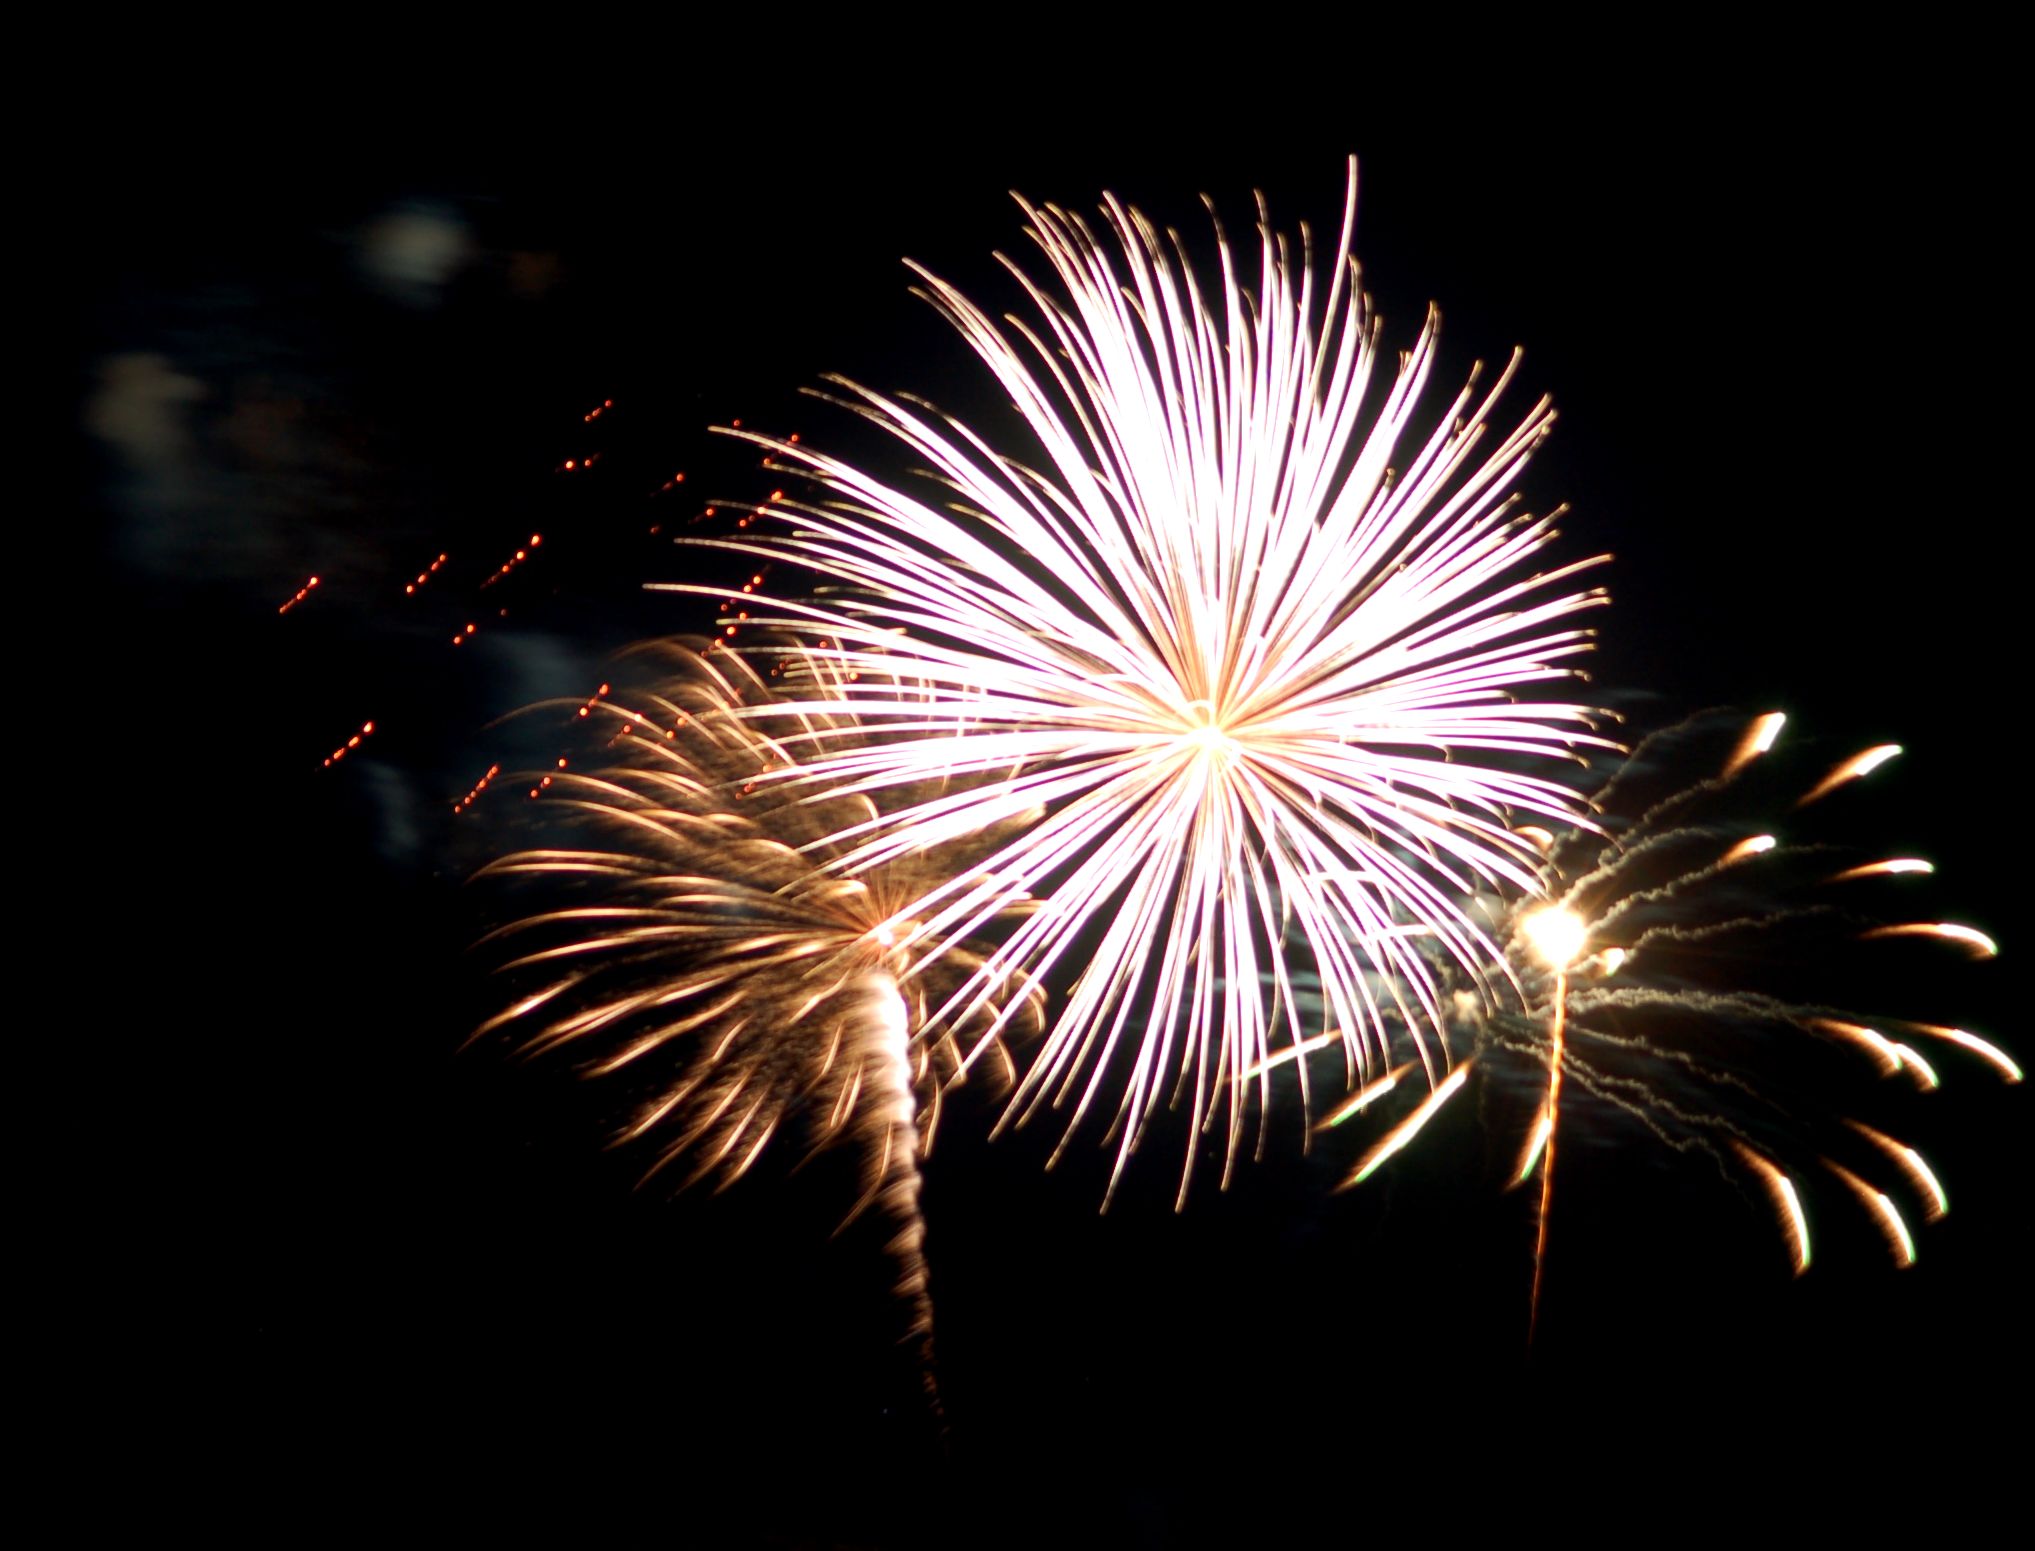 Fireworks by Kathy McCabe